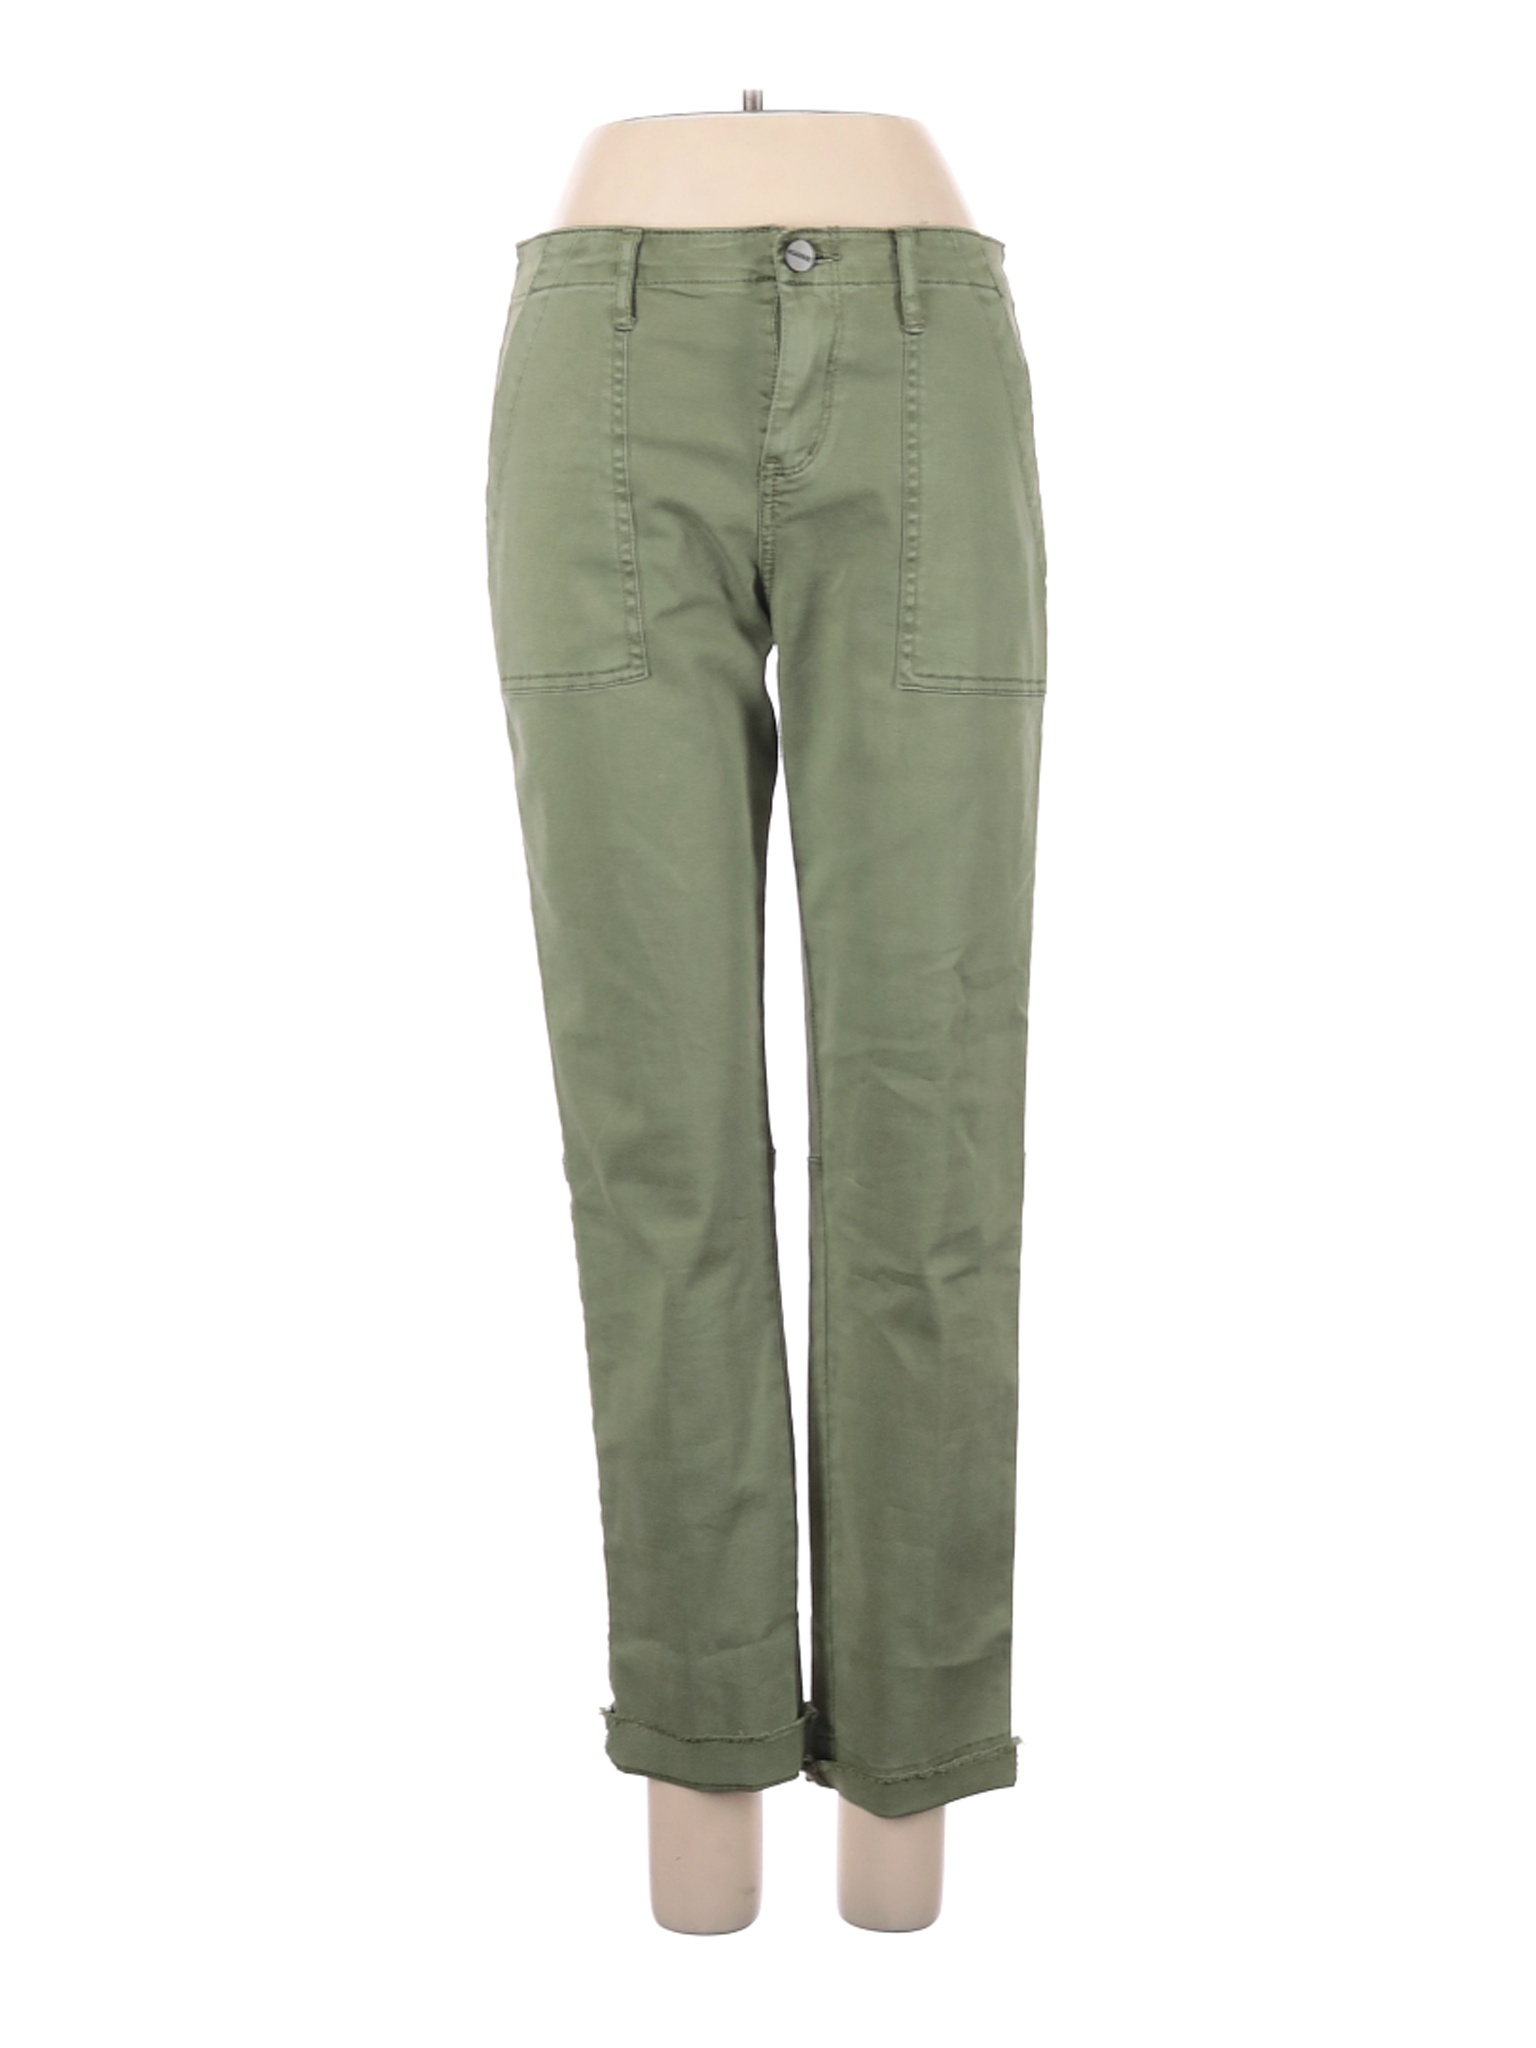 Sanctuary Women Green Casual Pants 26W | eBay